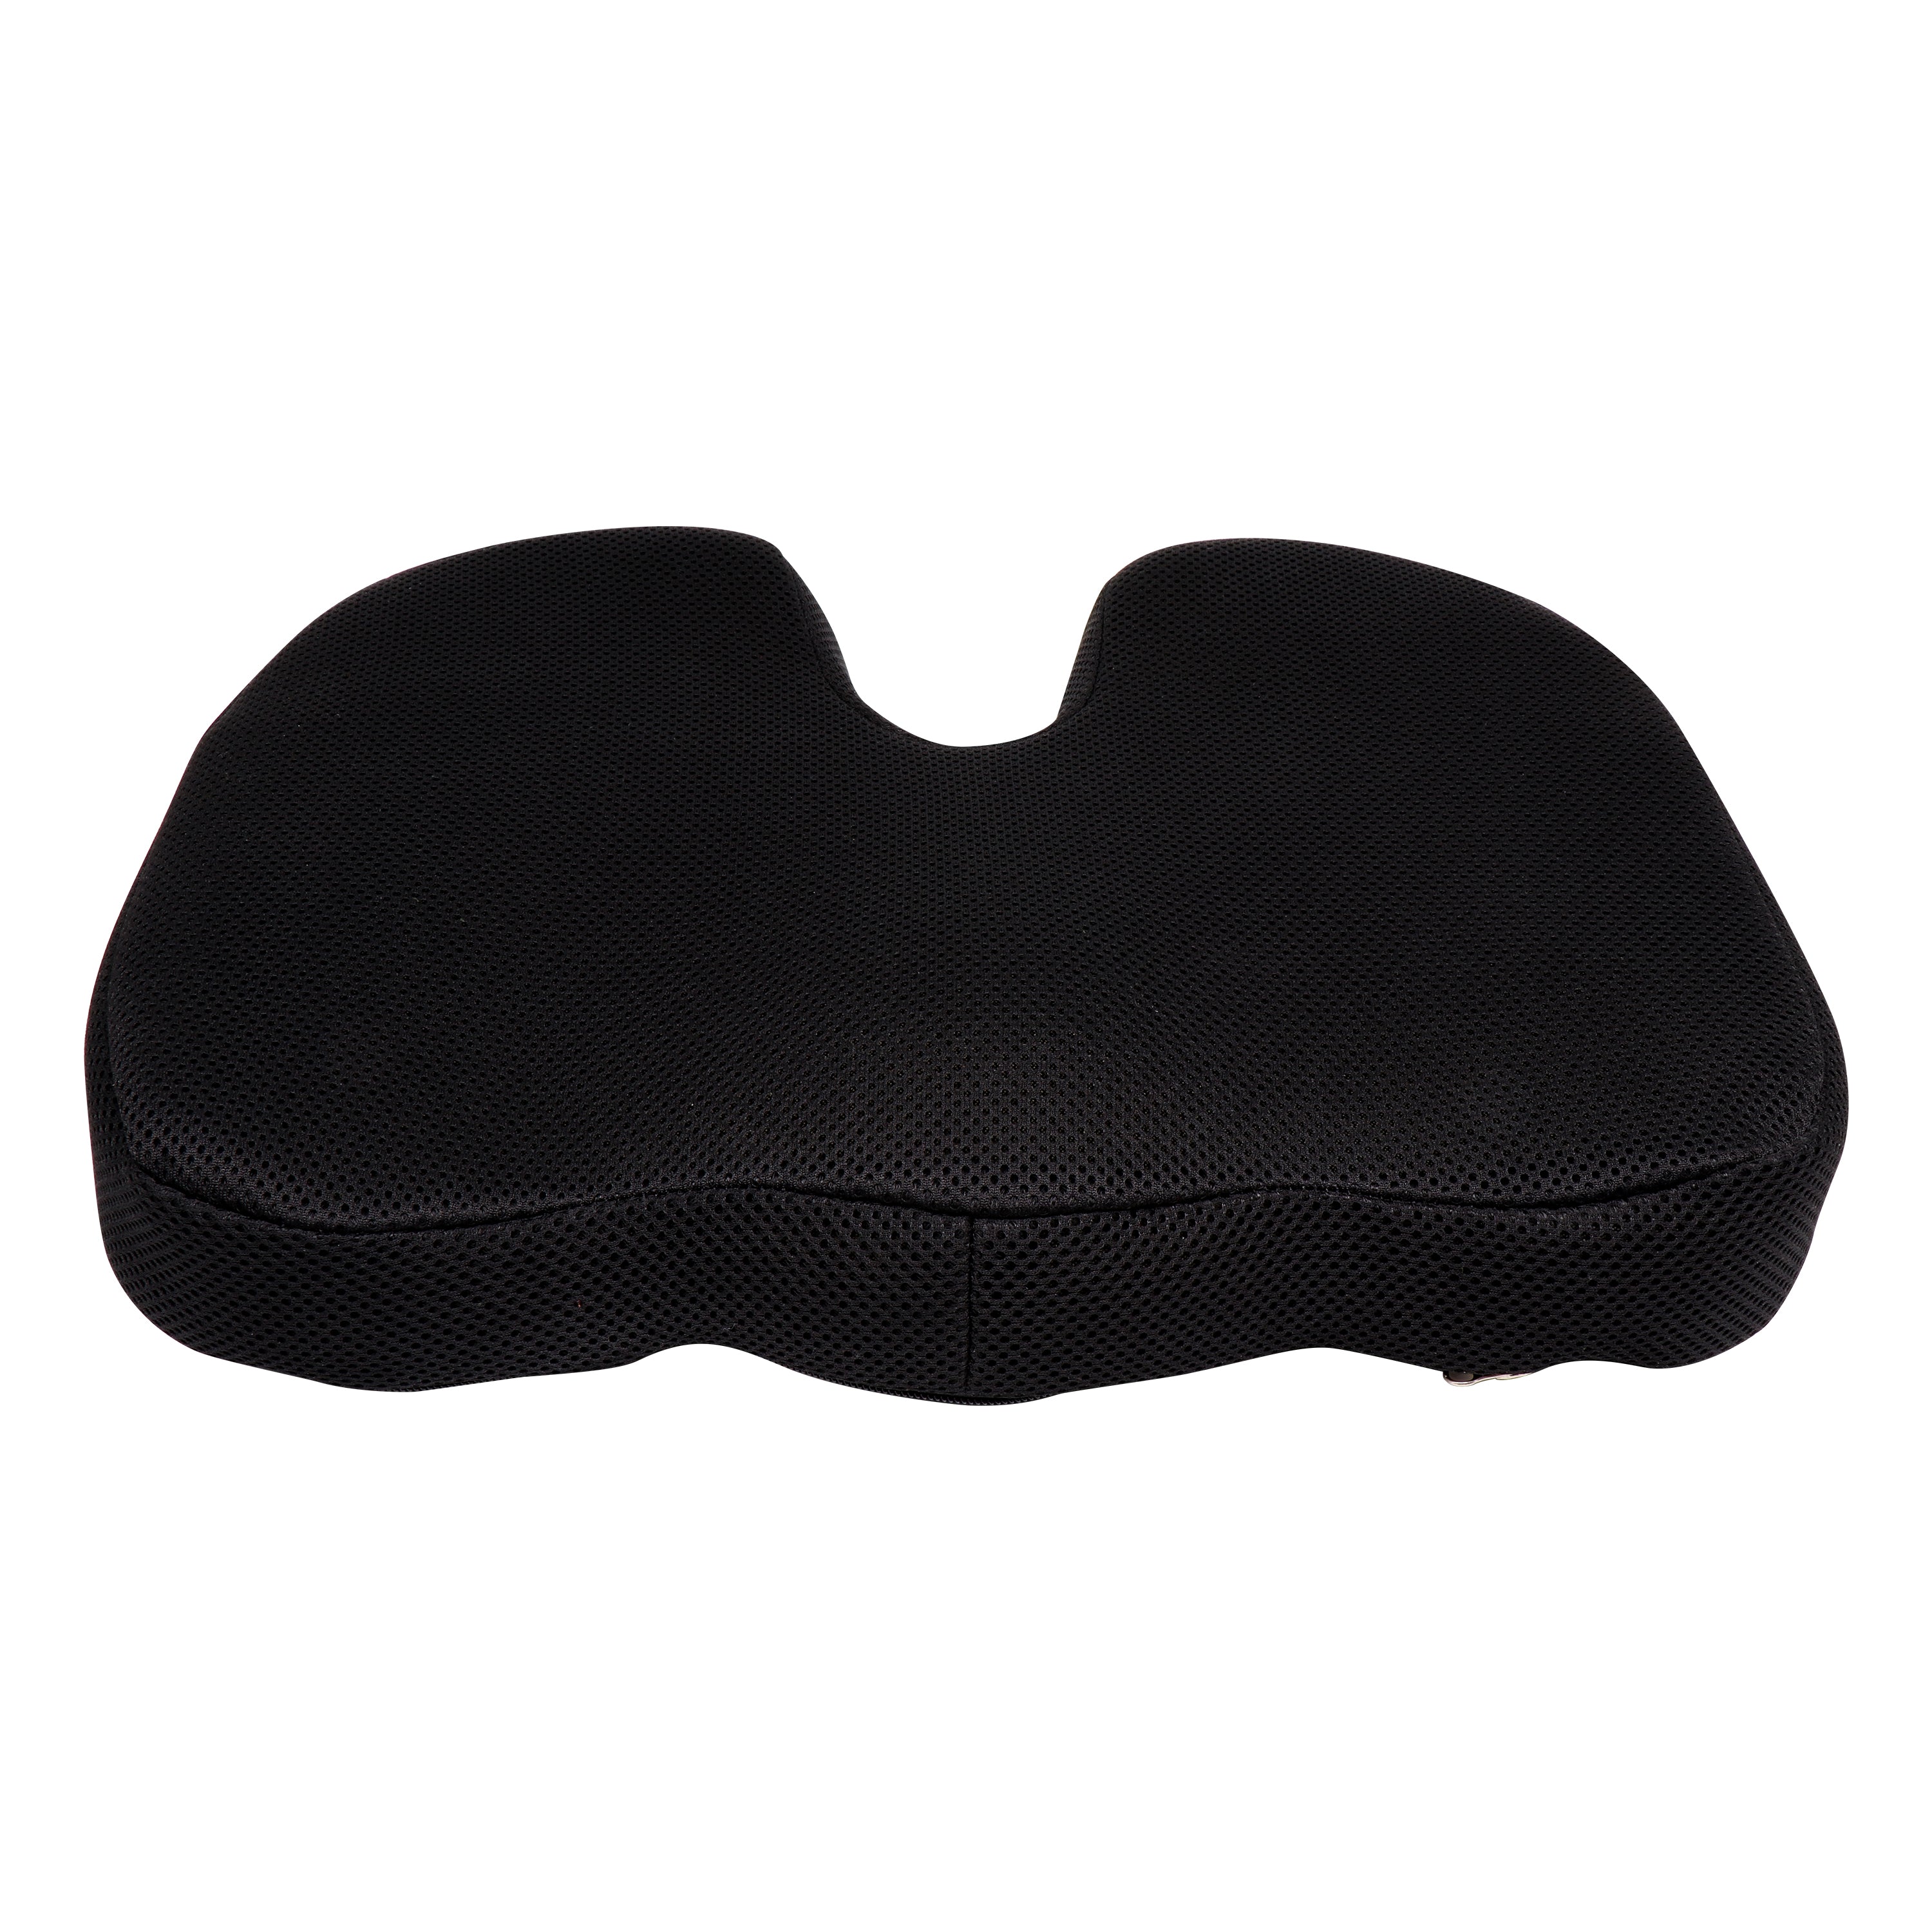 Orthopedic Memory Foam Coccyx Seat Cushion for Tailbone, Sciatica & Back Pain Relief - Mesh Black